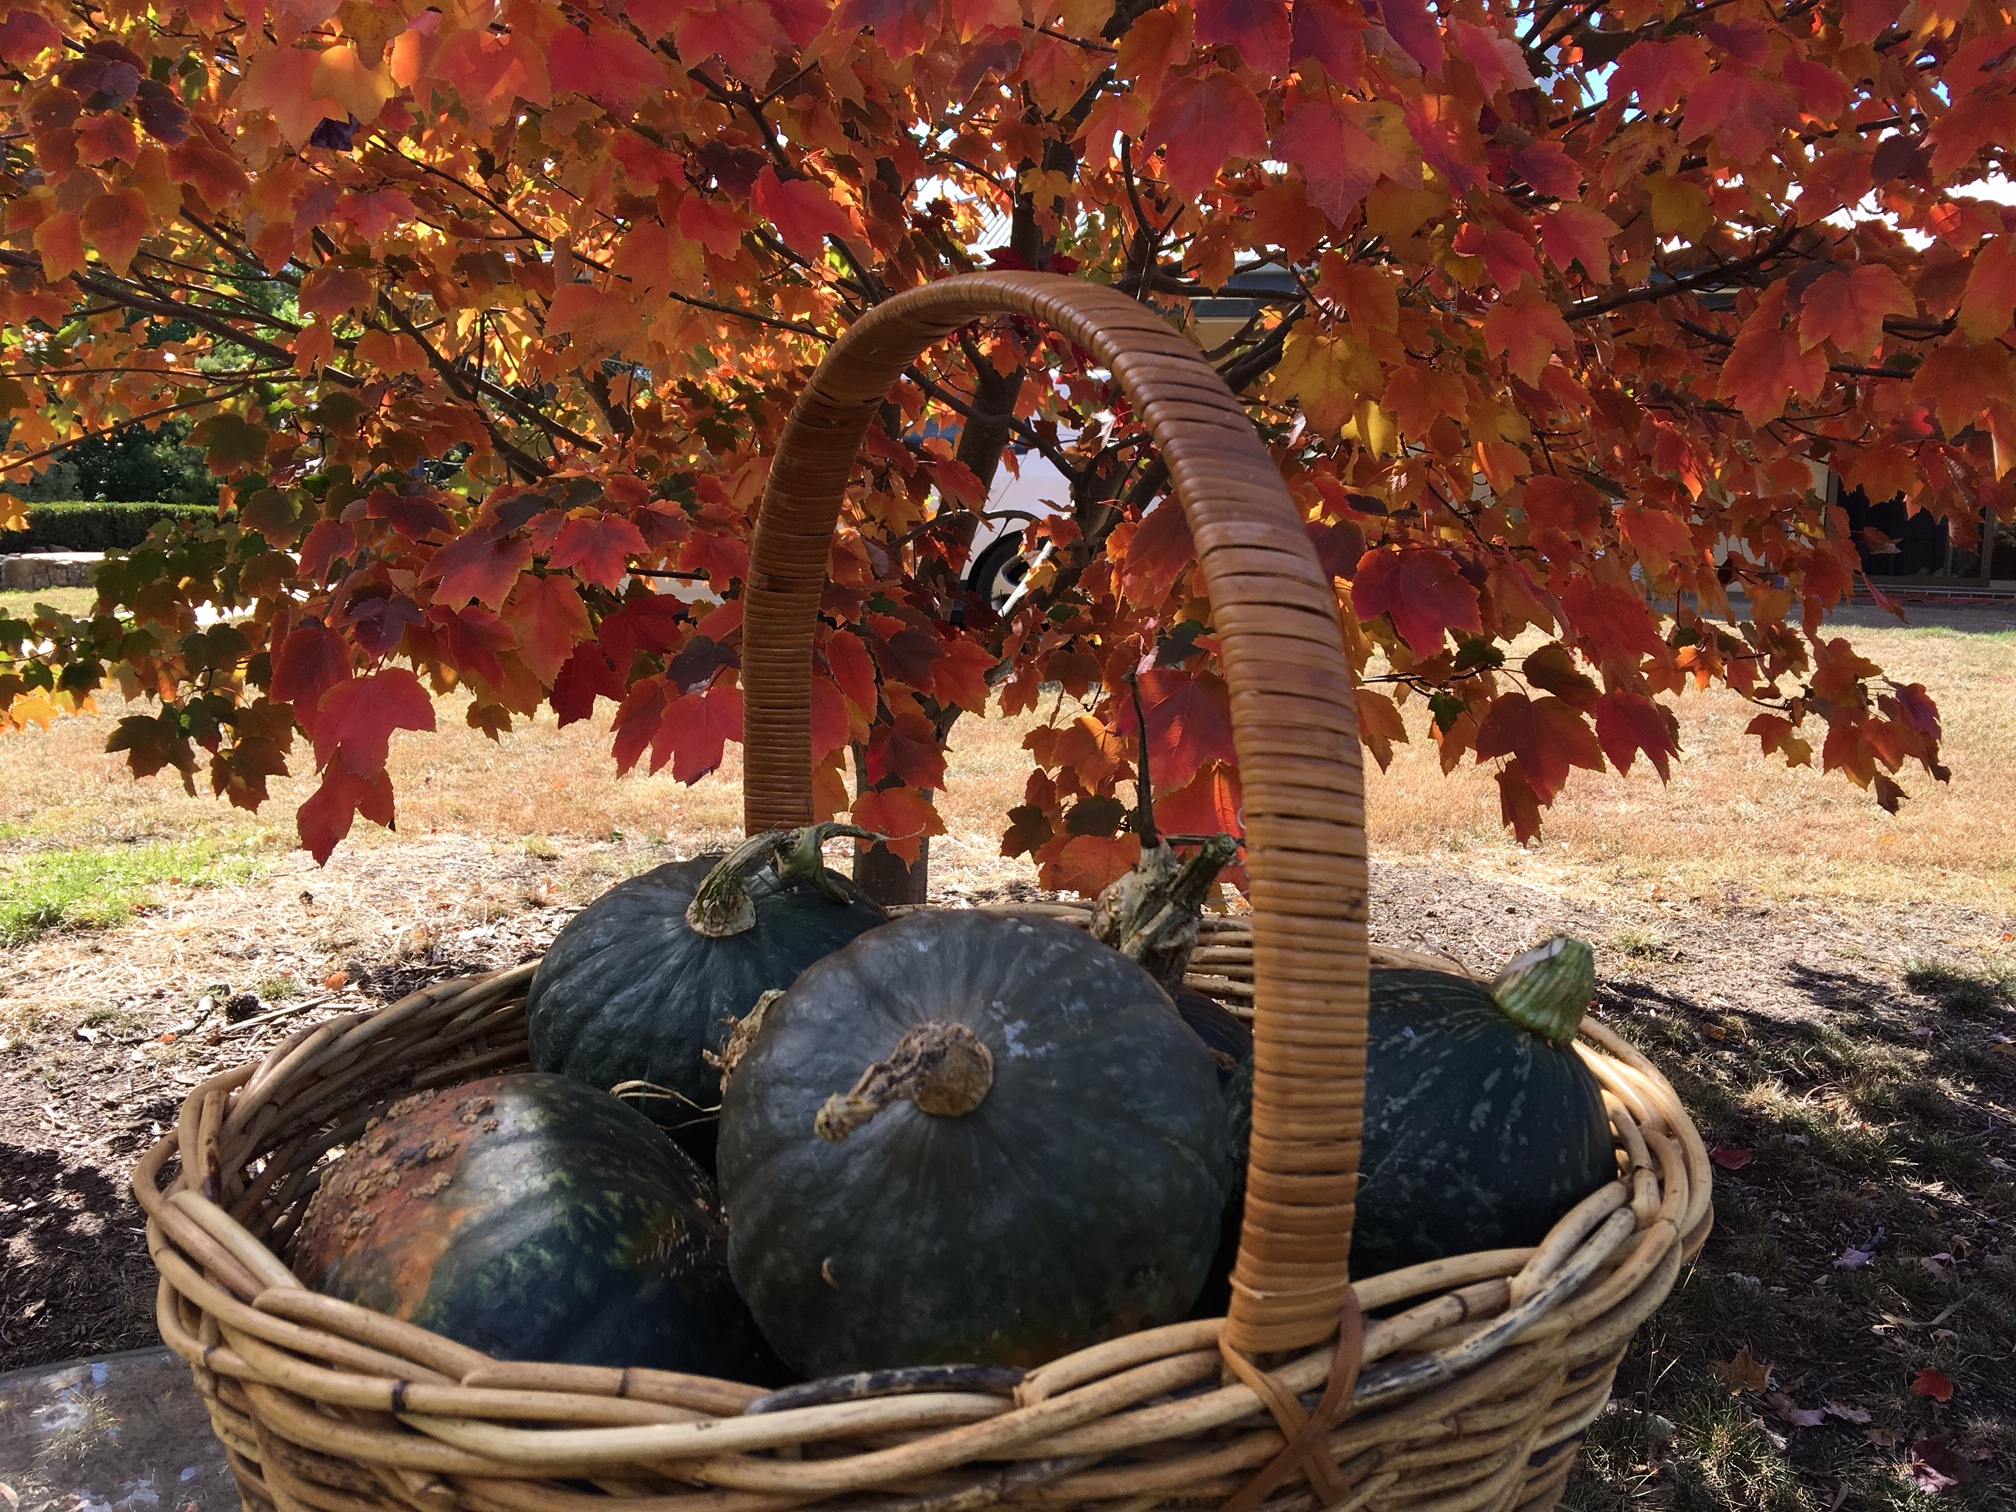 Autumn harvest of pumpkins in a cane basket.